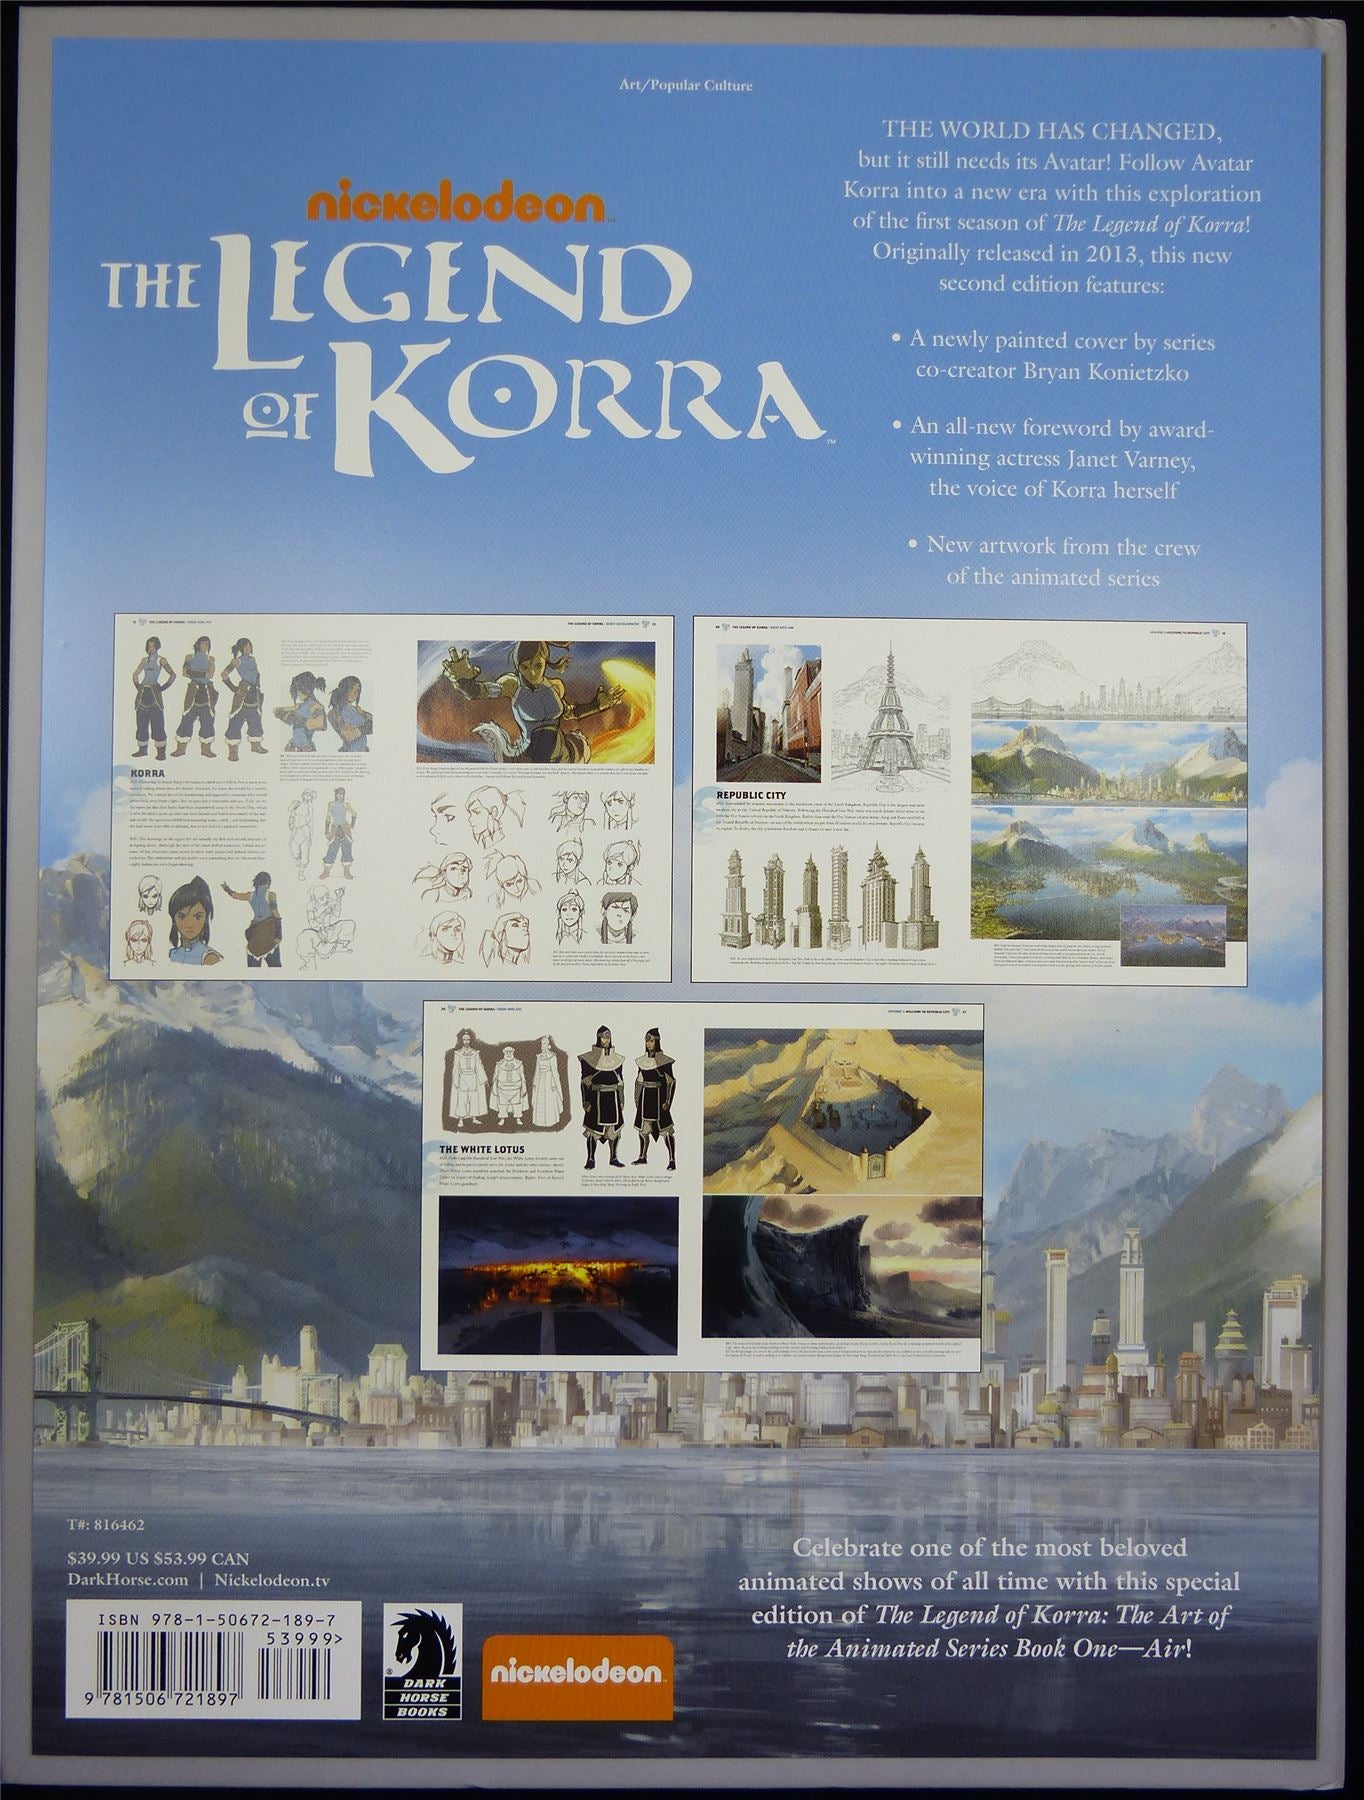 The LEGEND of Korra Book 1 Air: The Art of - Dark Horse Art Book Hardback #10Z